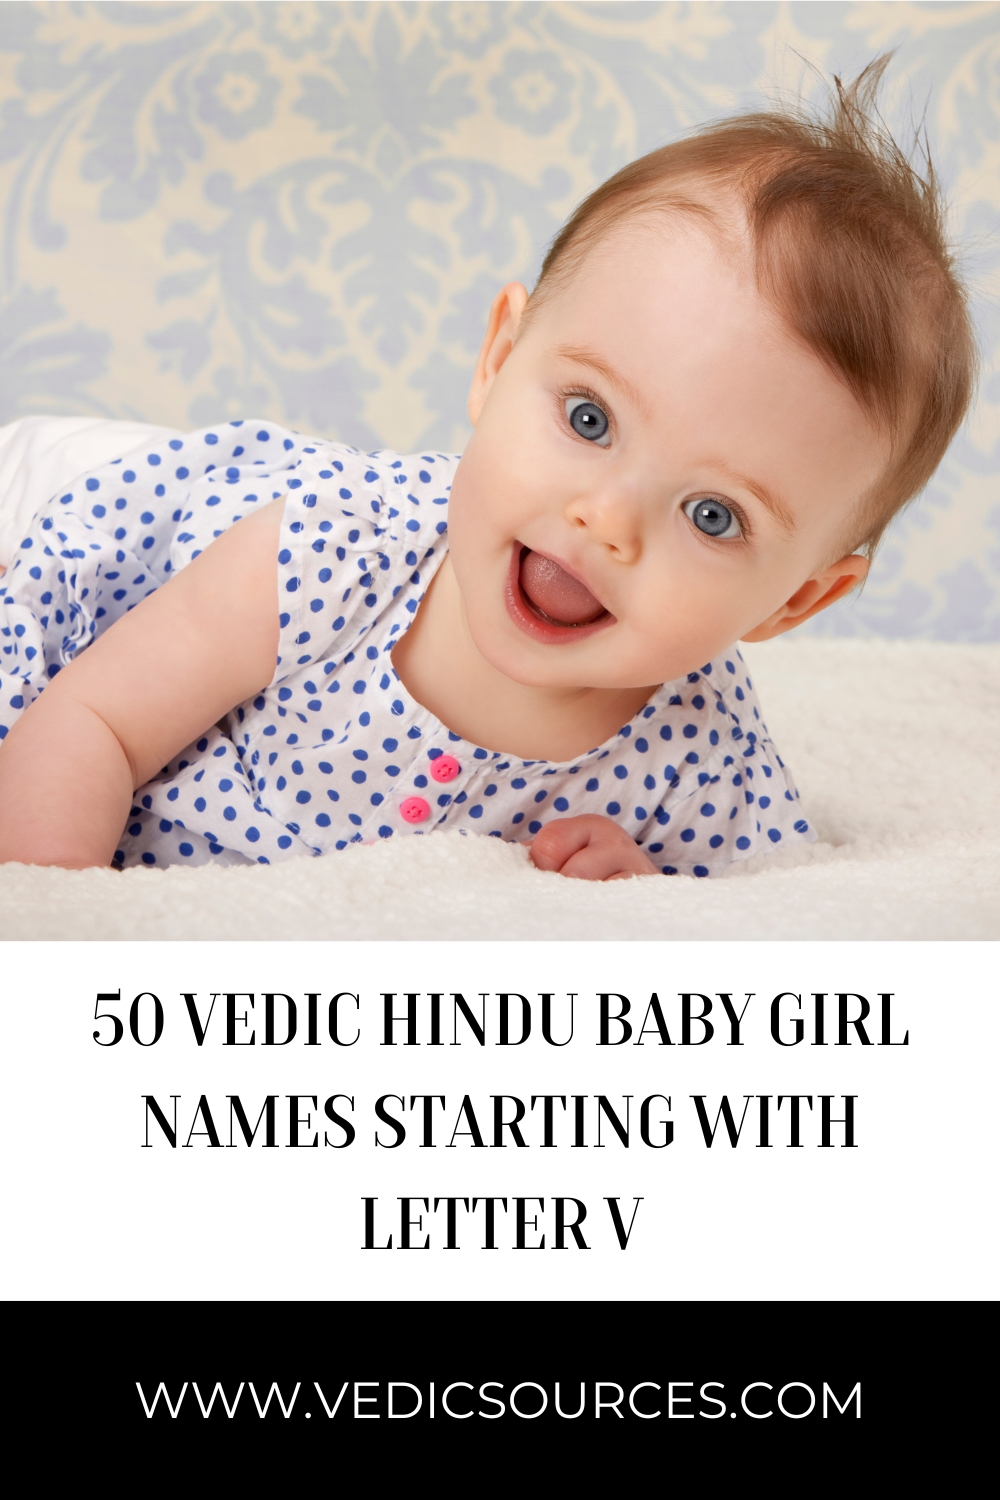 50 Vedic Hindu Baby Girl Names Starting with Letter V